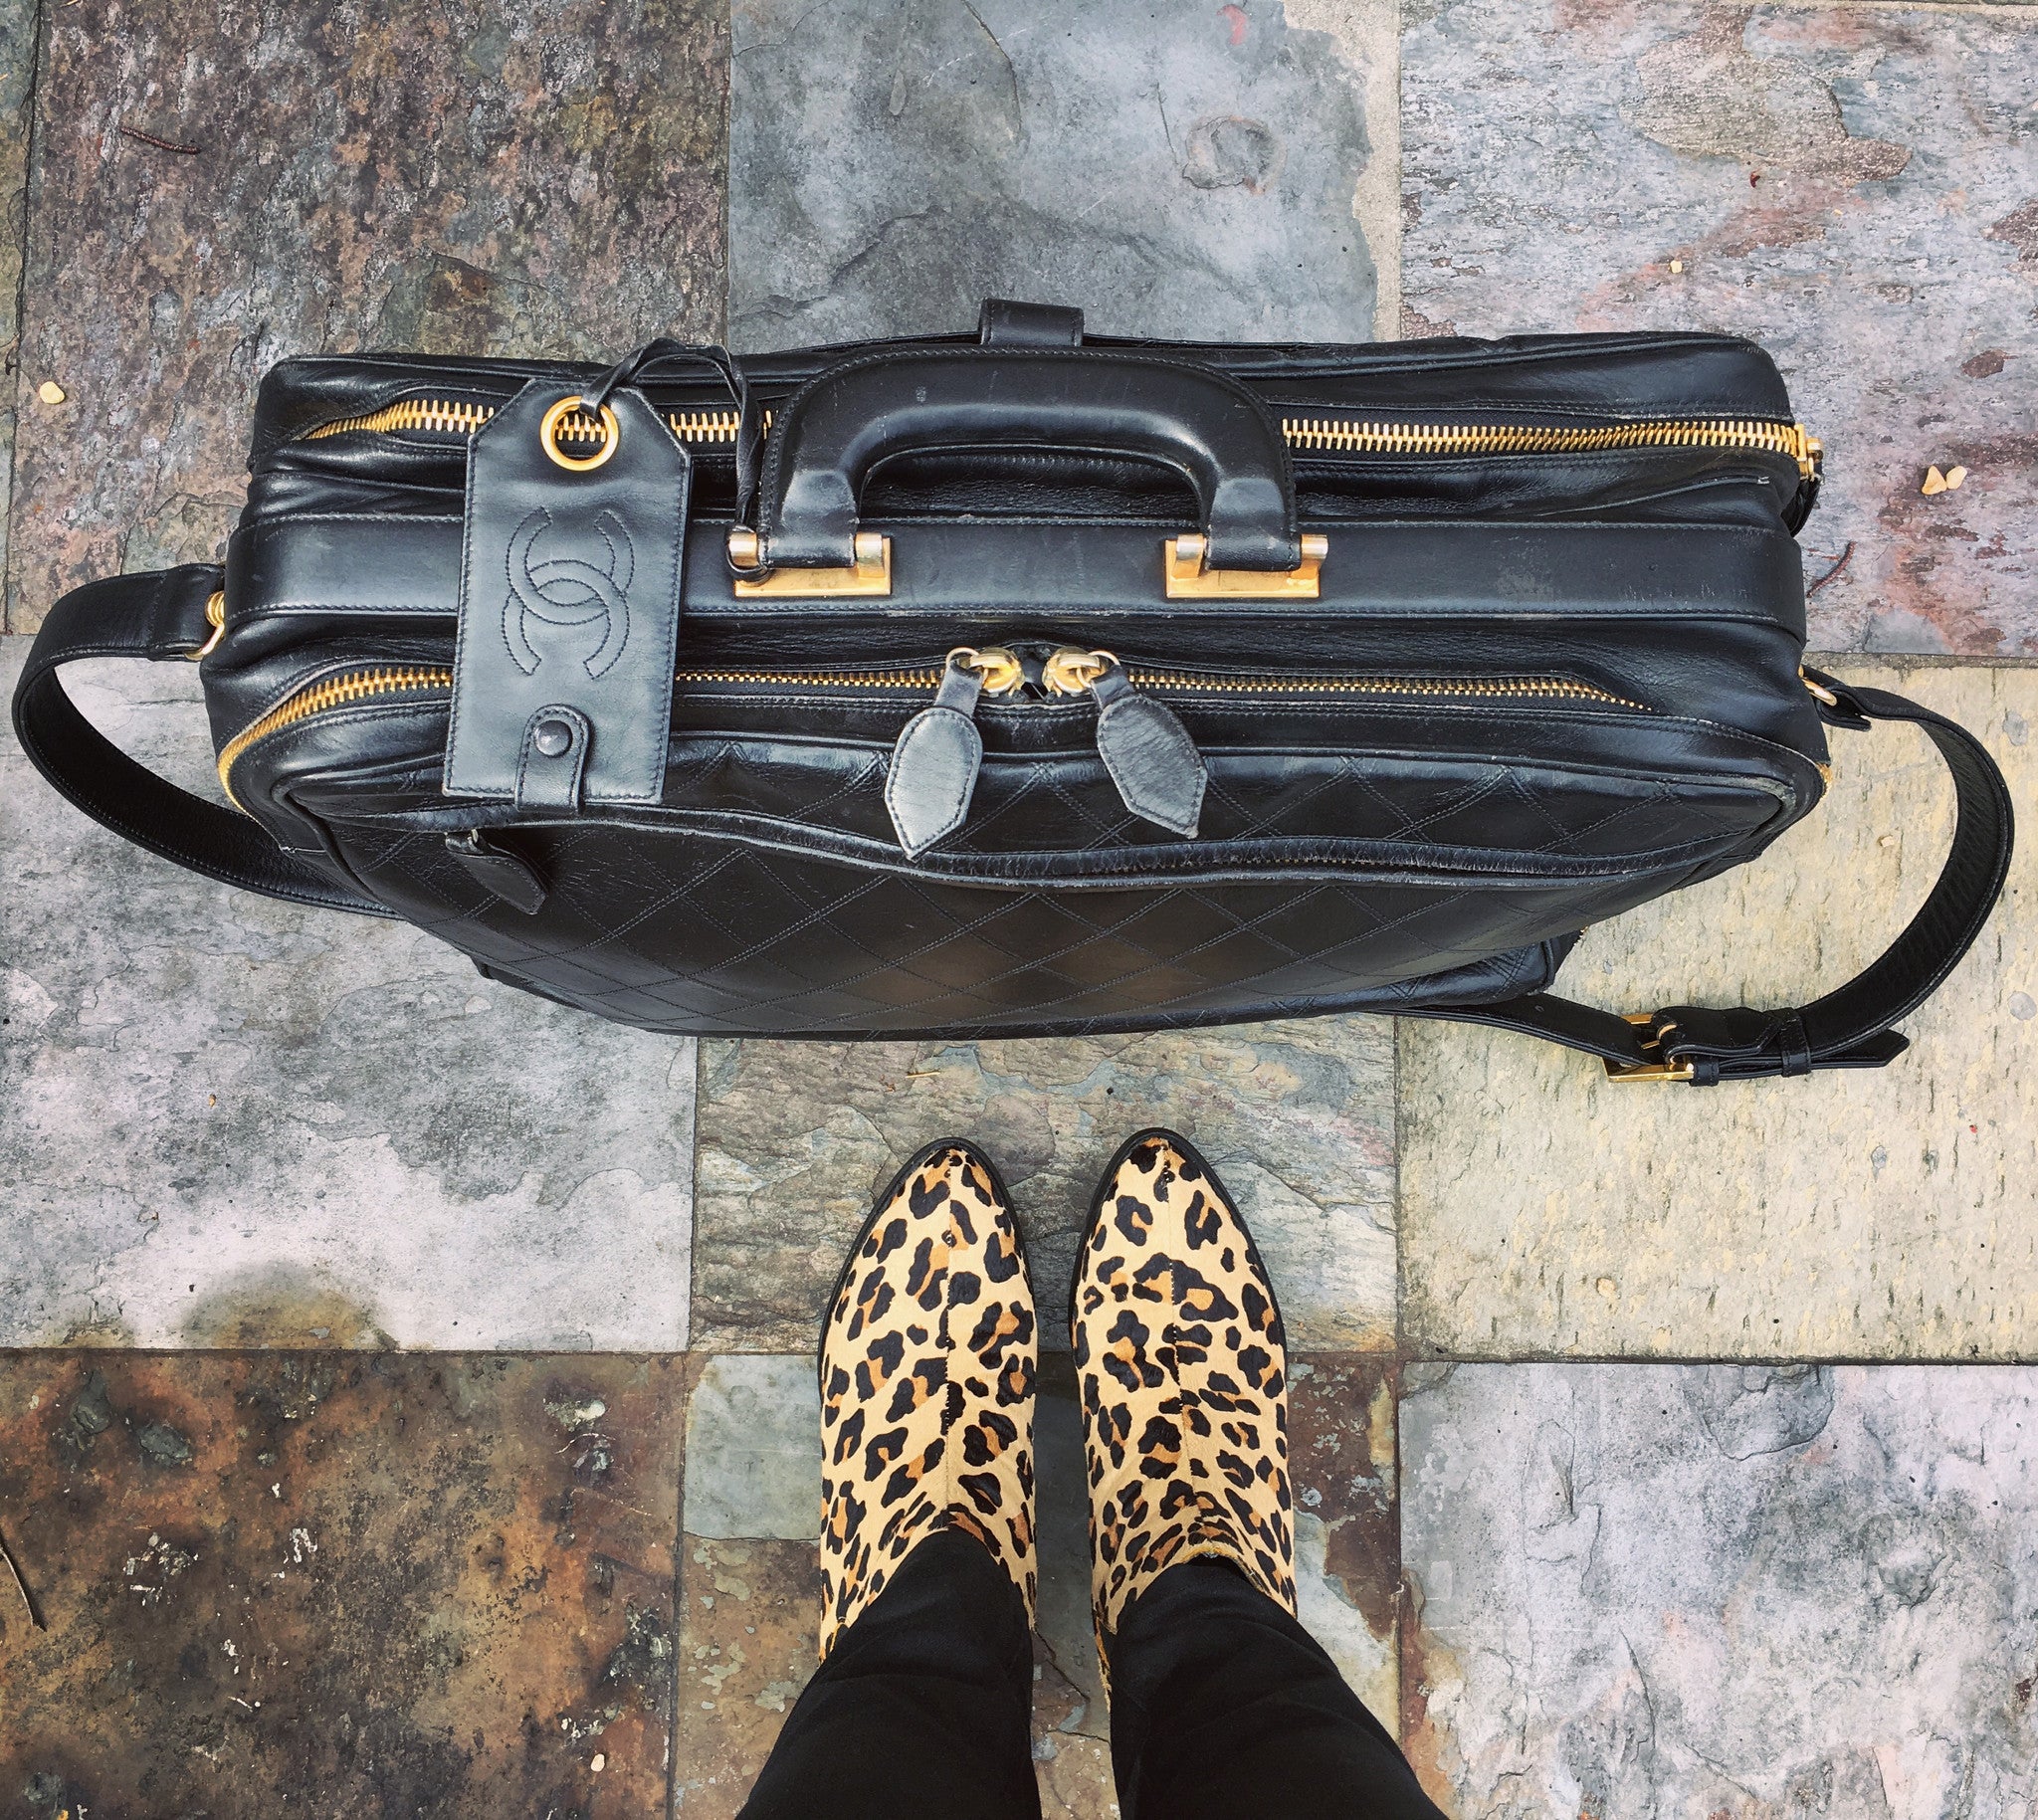 CHANEL Black Lambskin Quilted Messenger Travel Bag